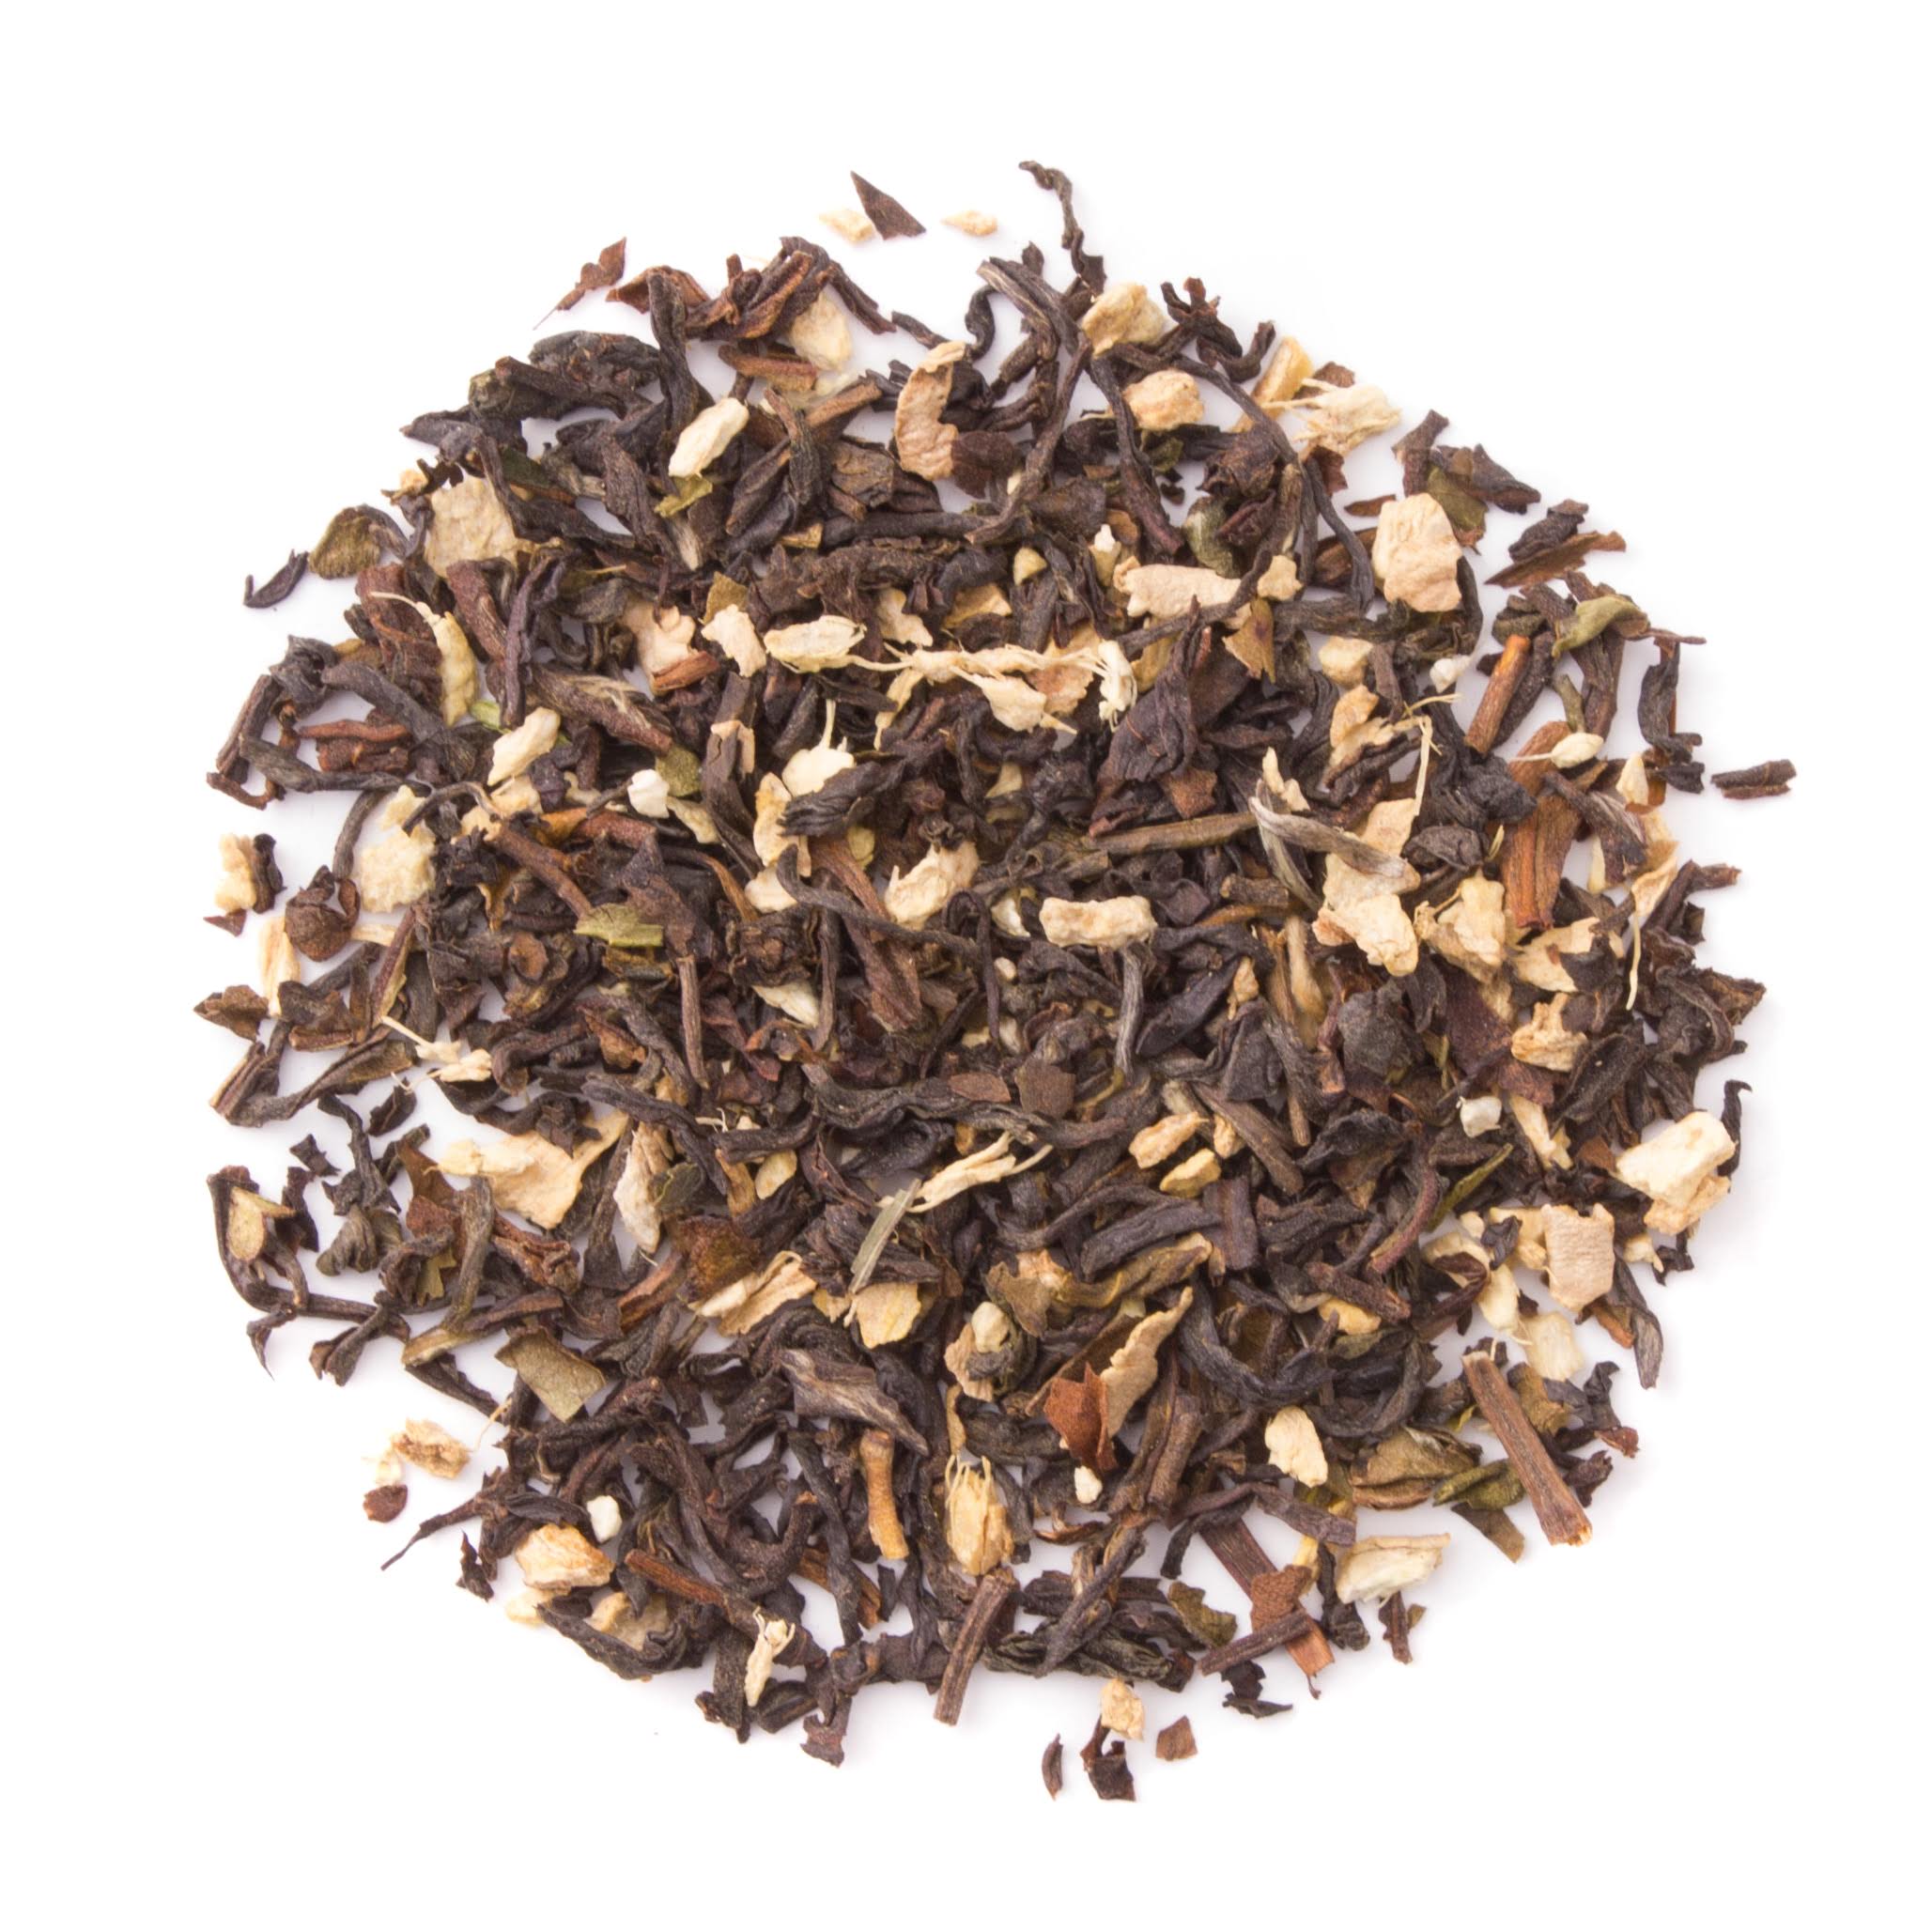 Organic Ginger Black, Bulk Loose Leaf Black Tea, 16 Oz. - Bulk Black Tea - Premium Loose Tea Leaves - Organic & Kosher | Heavenly Tea Leaves